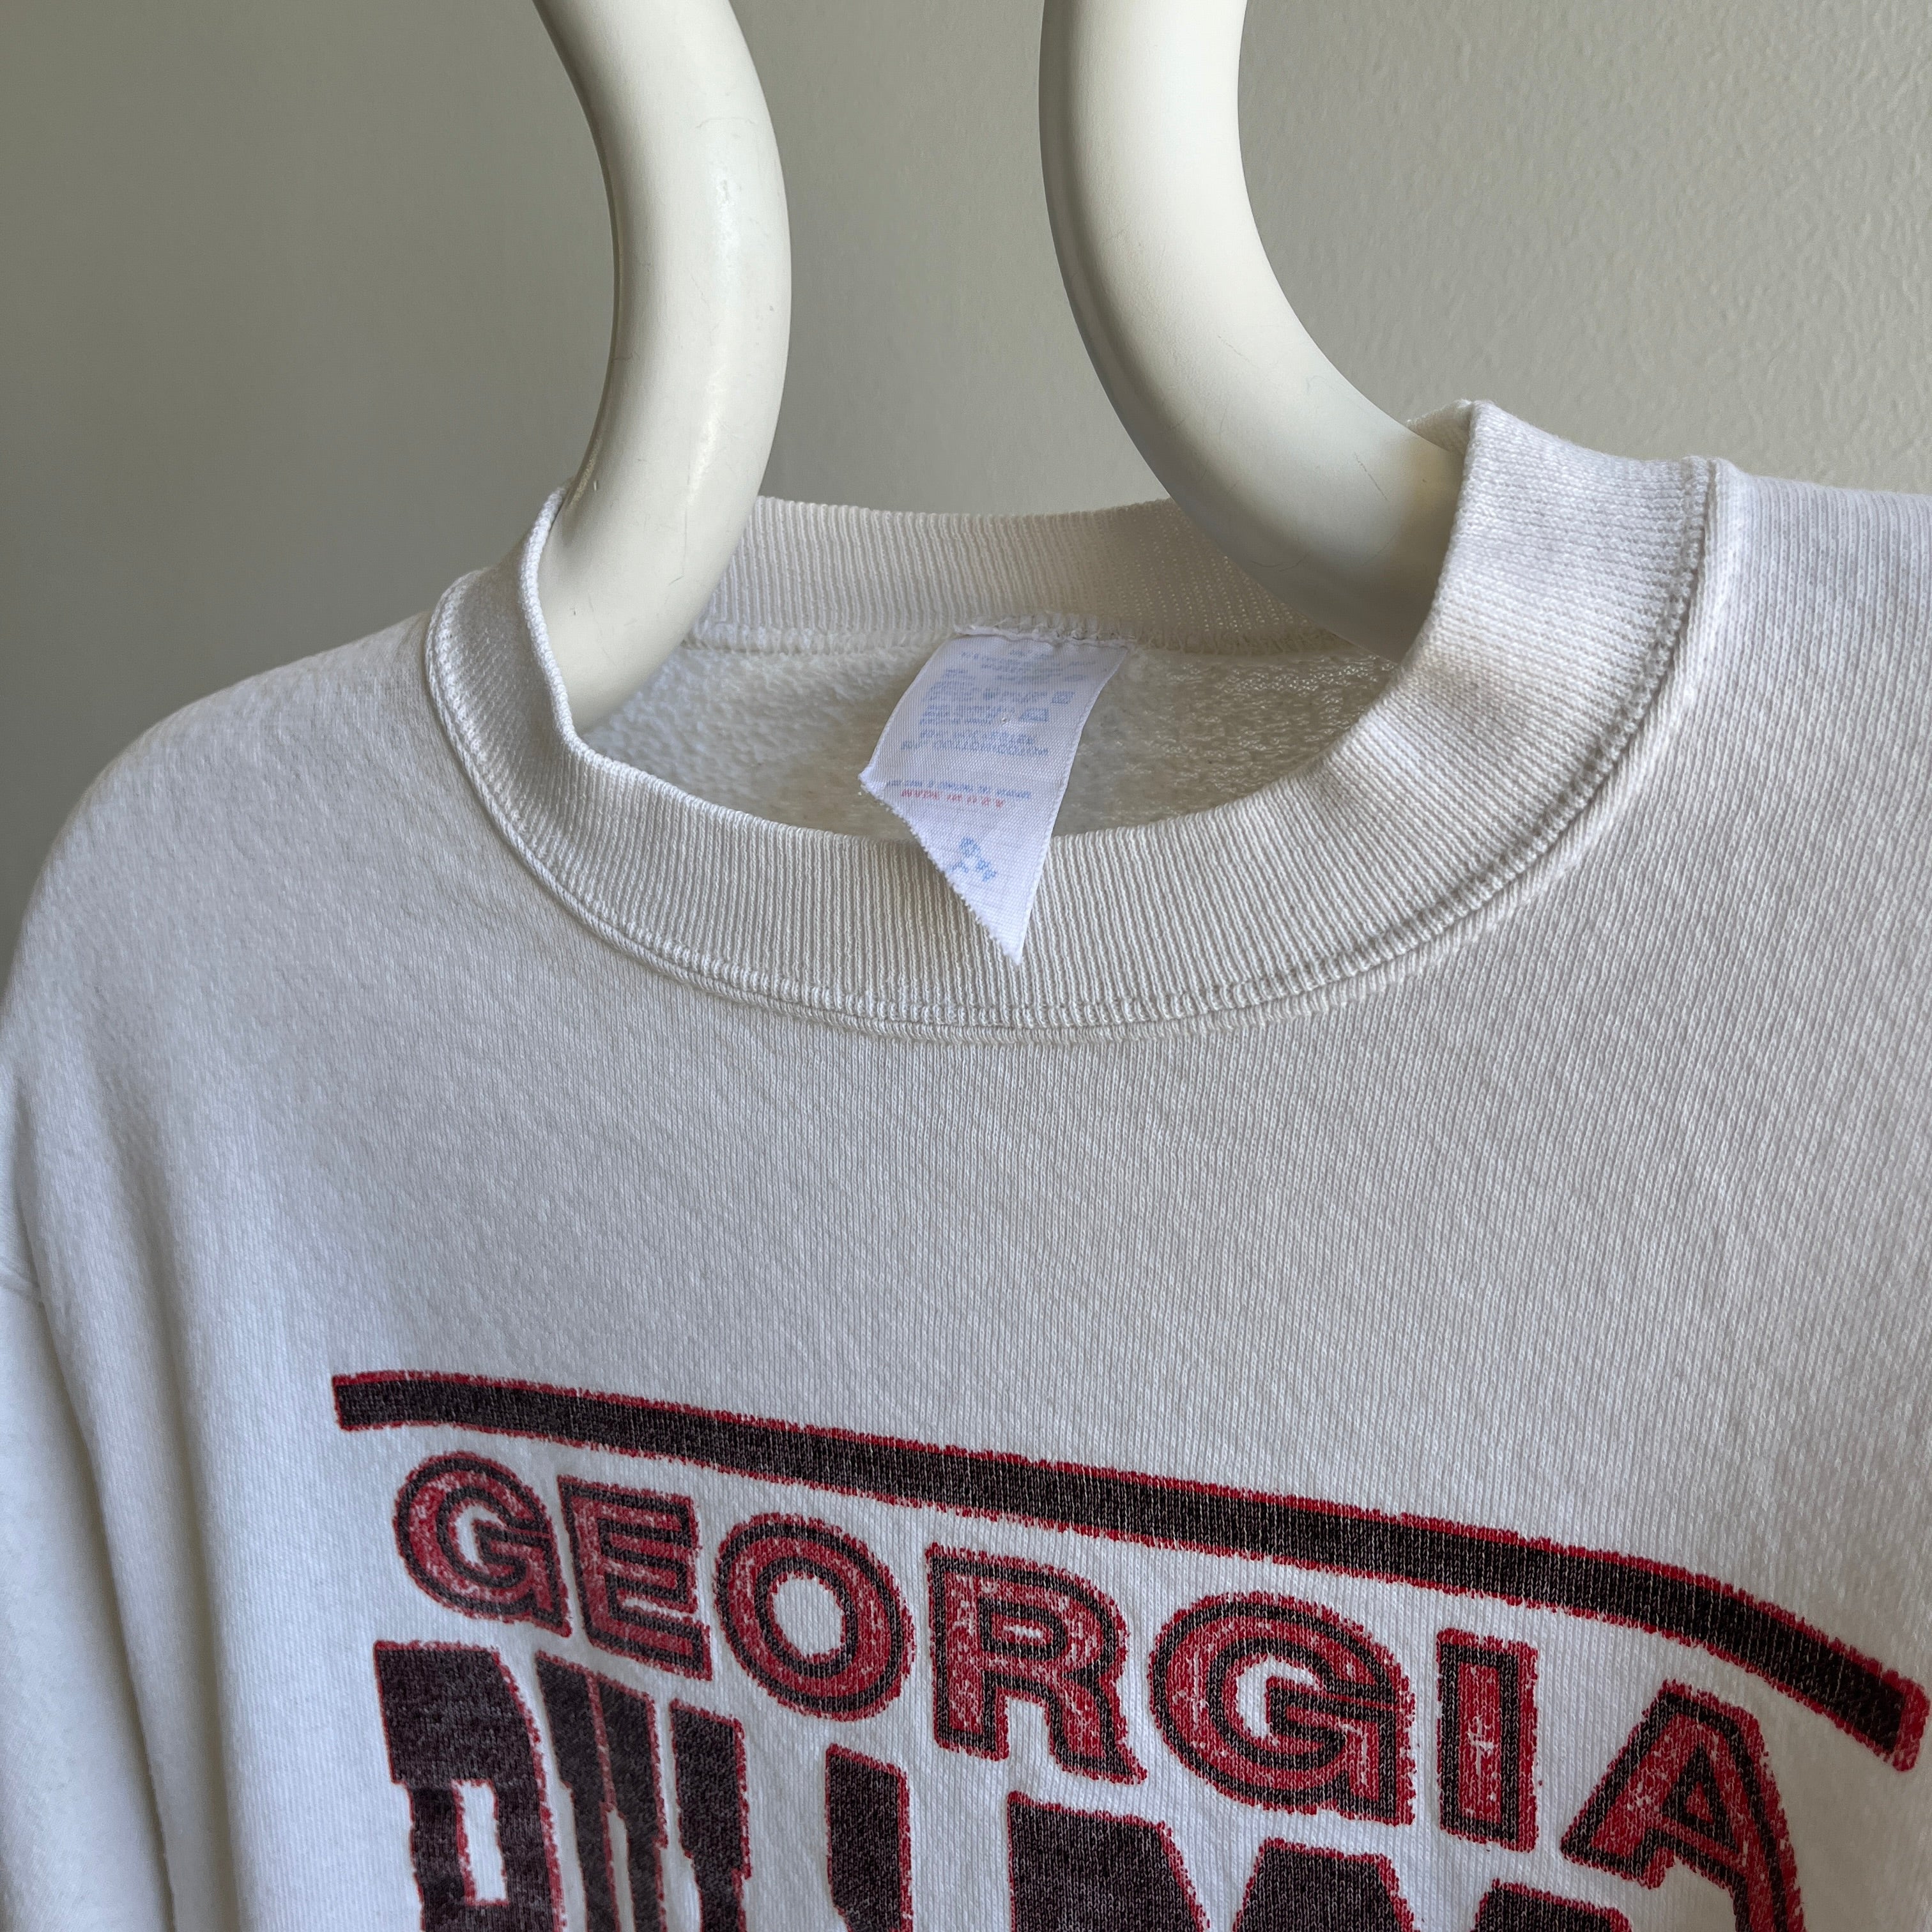 1980s Georgia Bulldogs - GO DAWGS!!! - Sweatshirt